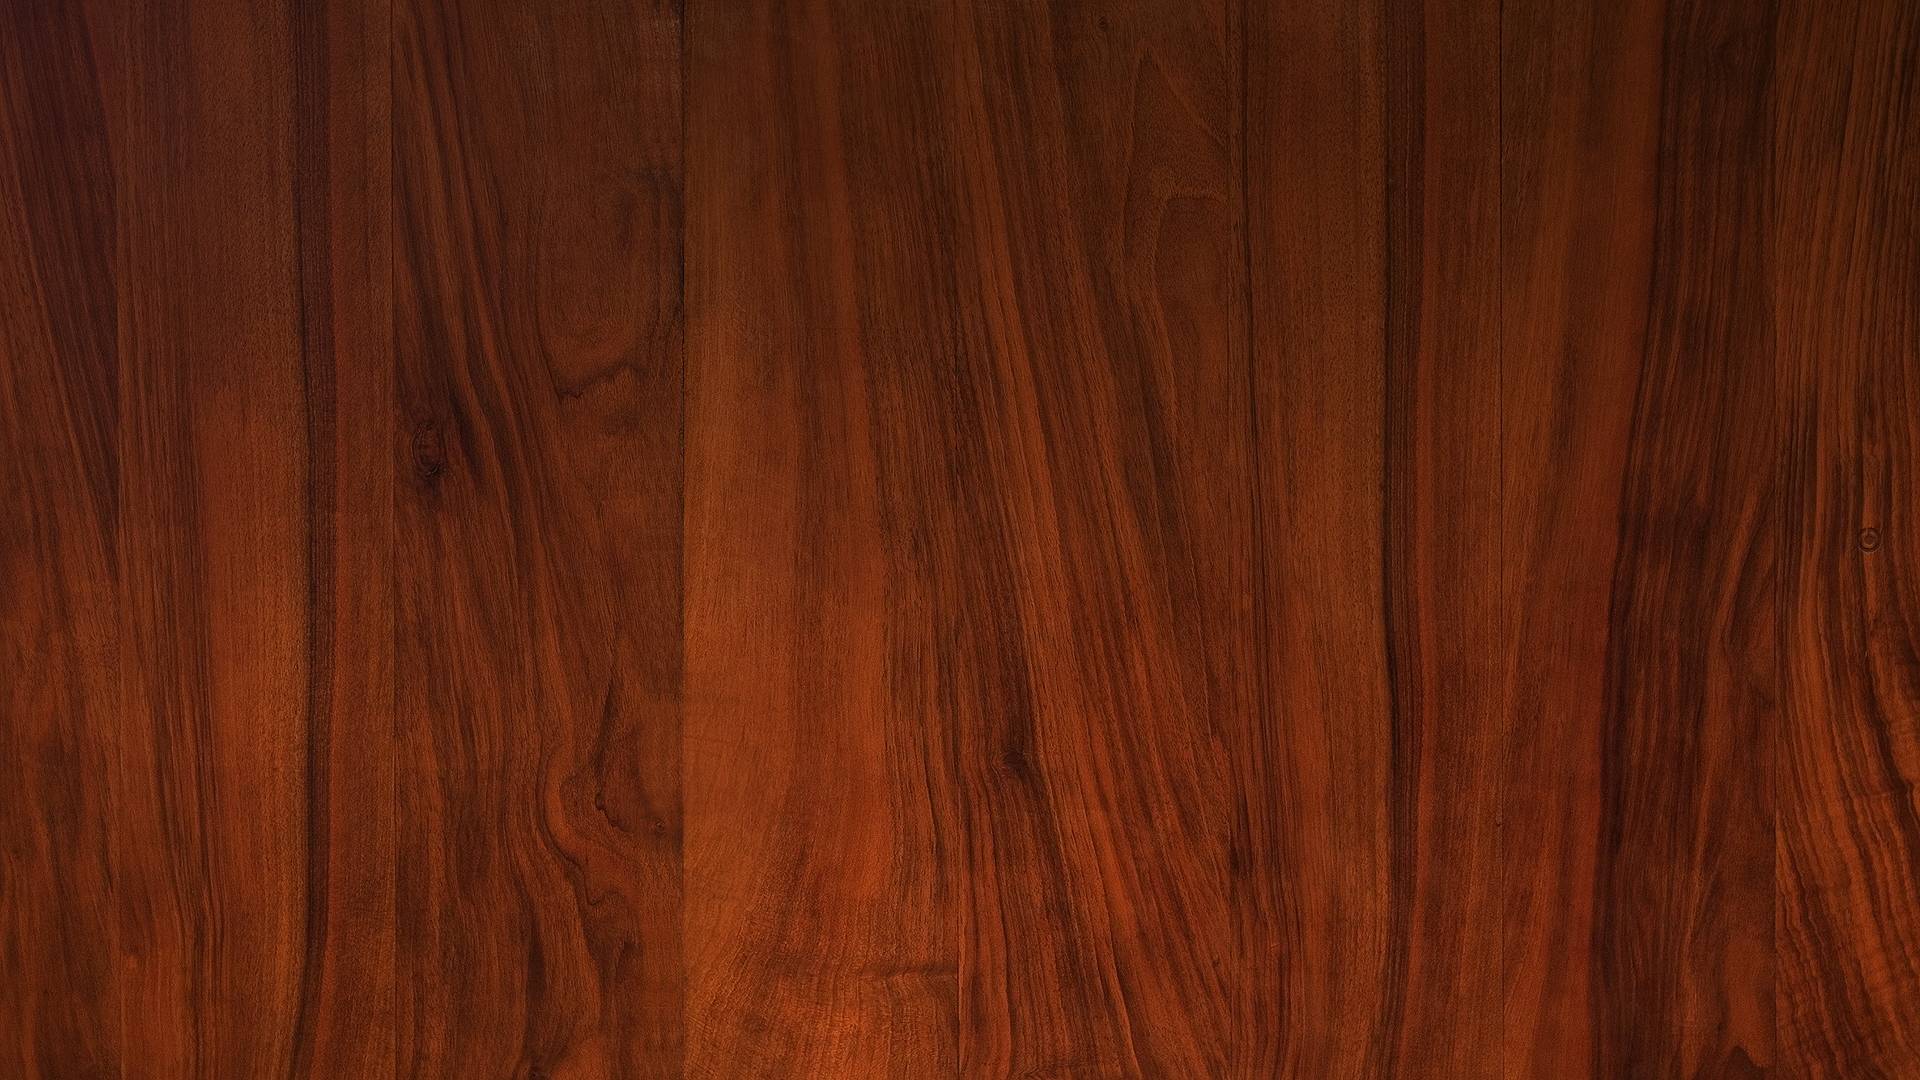 Wood OS X Wallpaper